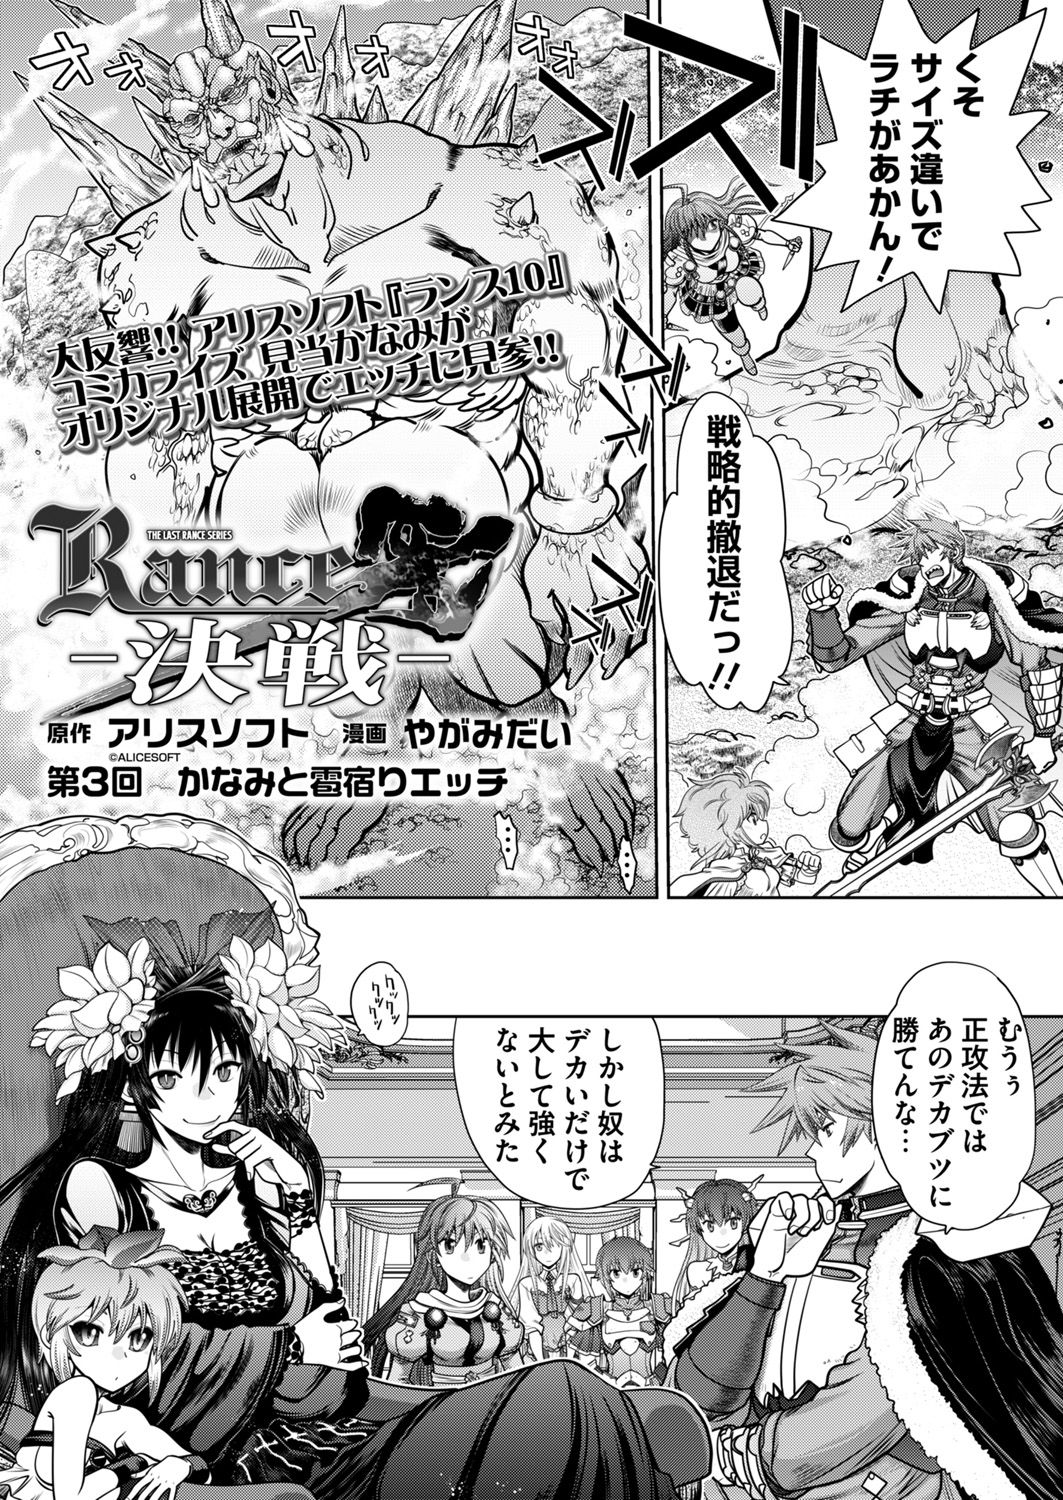 [Yagami Dai] Rance 10 -Kessen- Ch 03-09 page 1 full